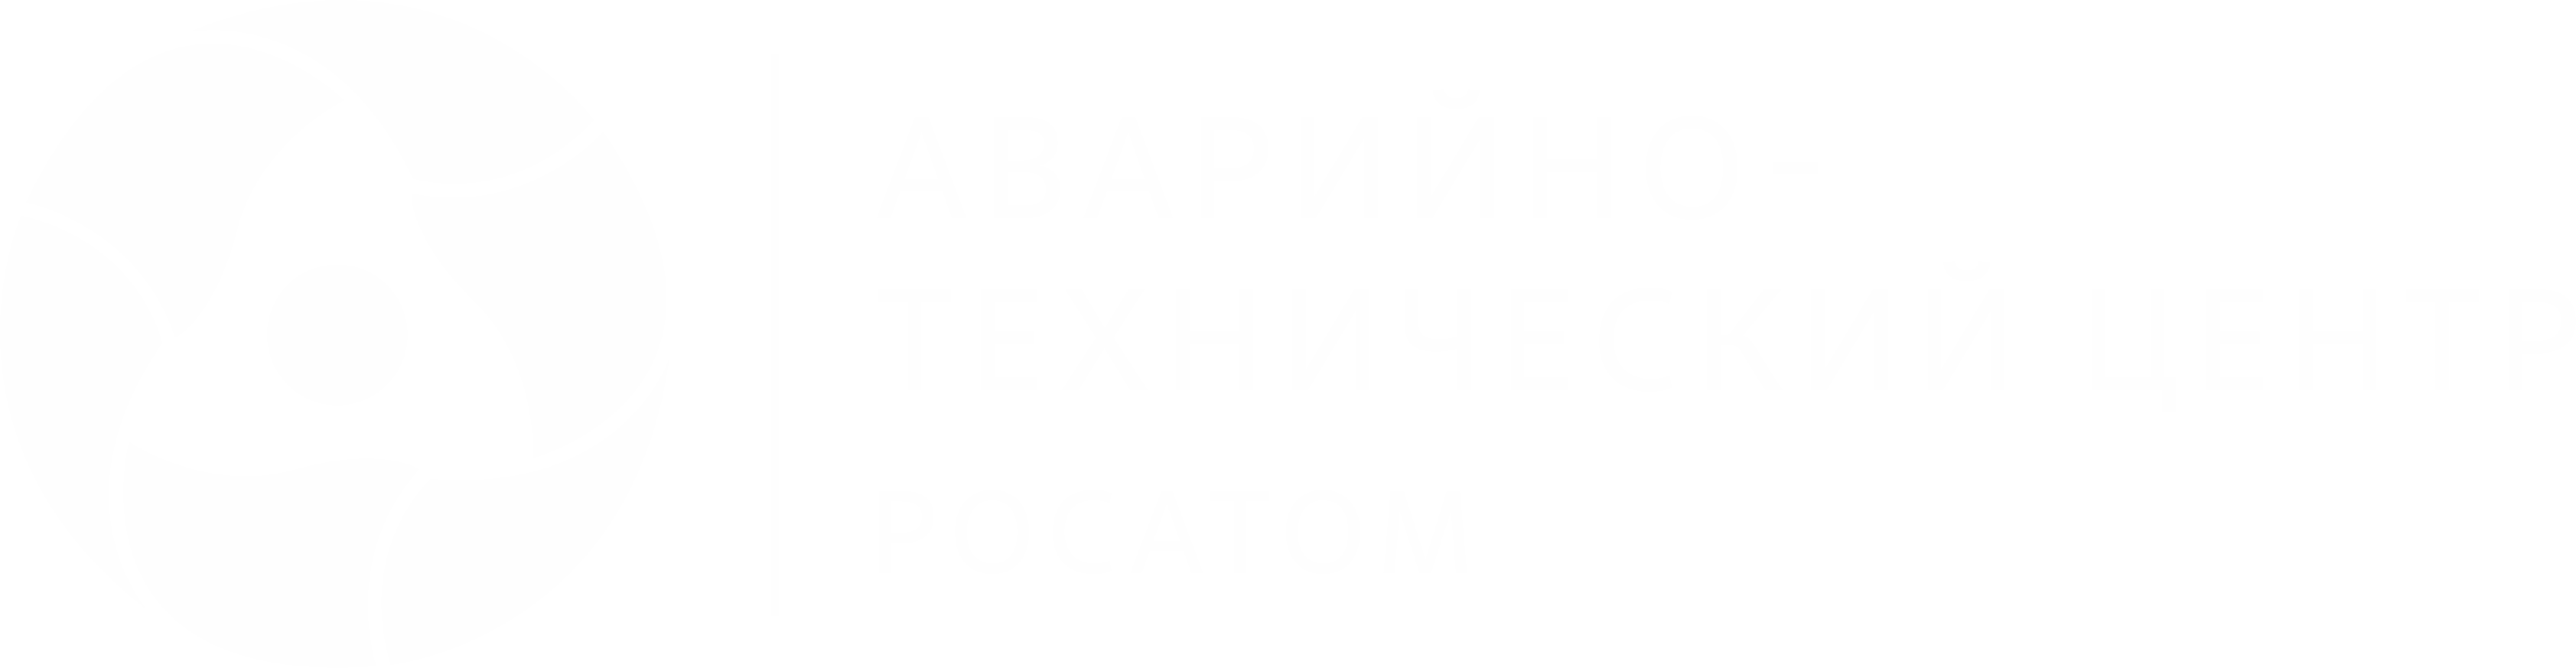 СДО АО  "АТЦ  Росатома"